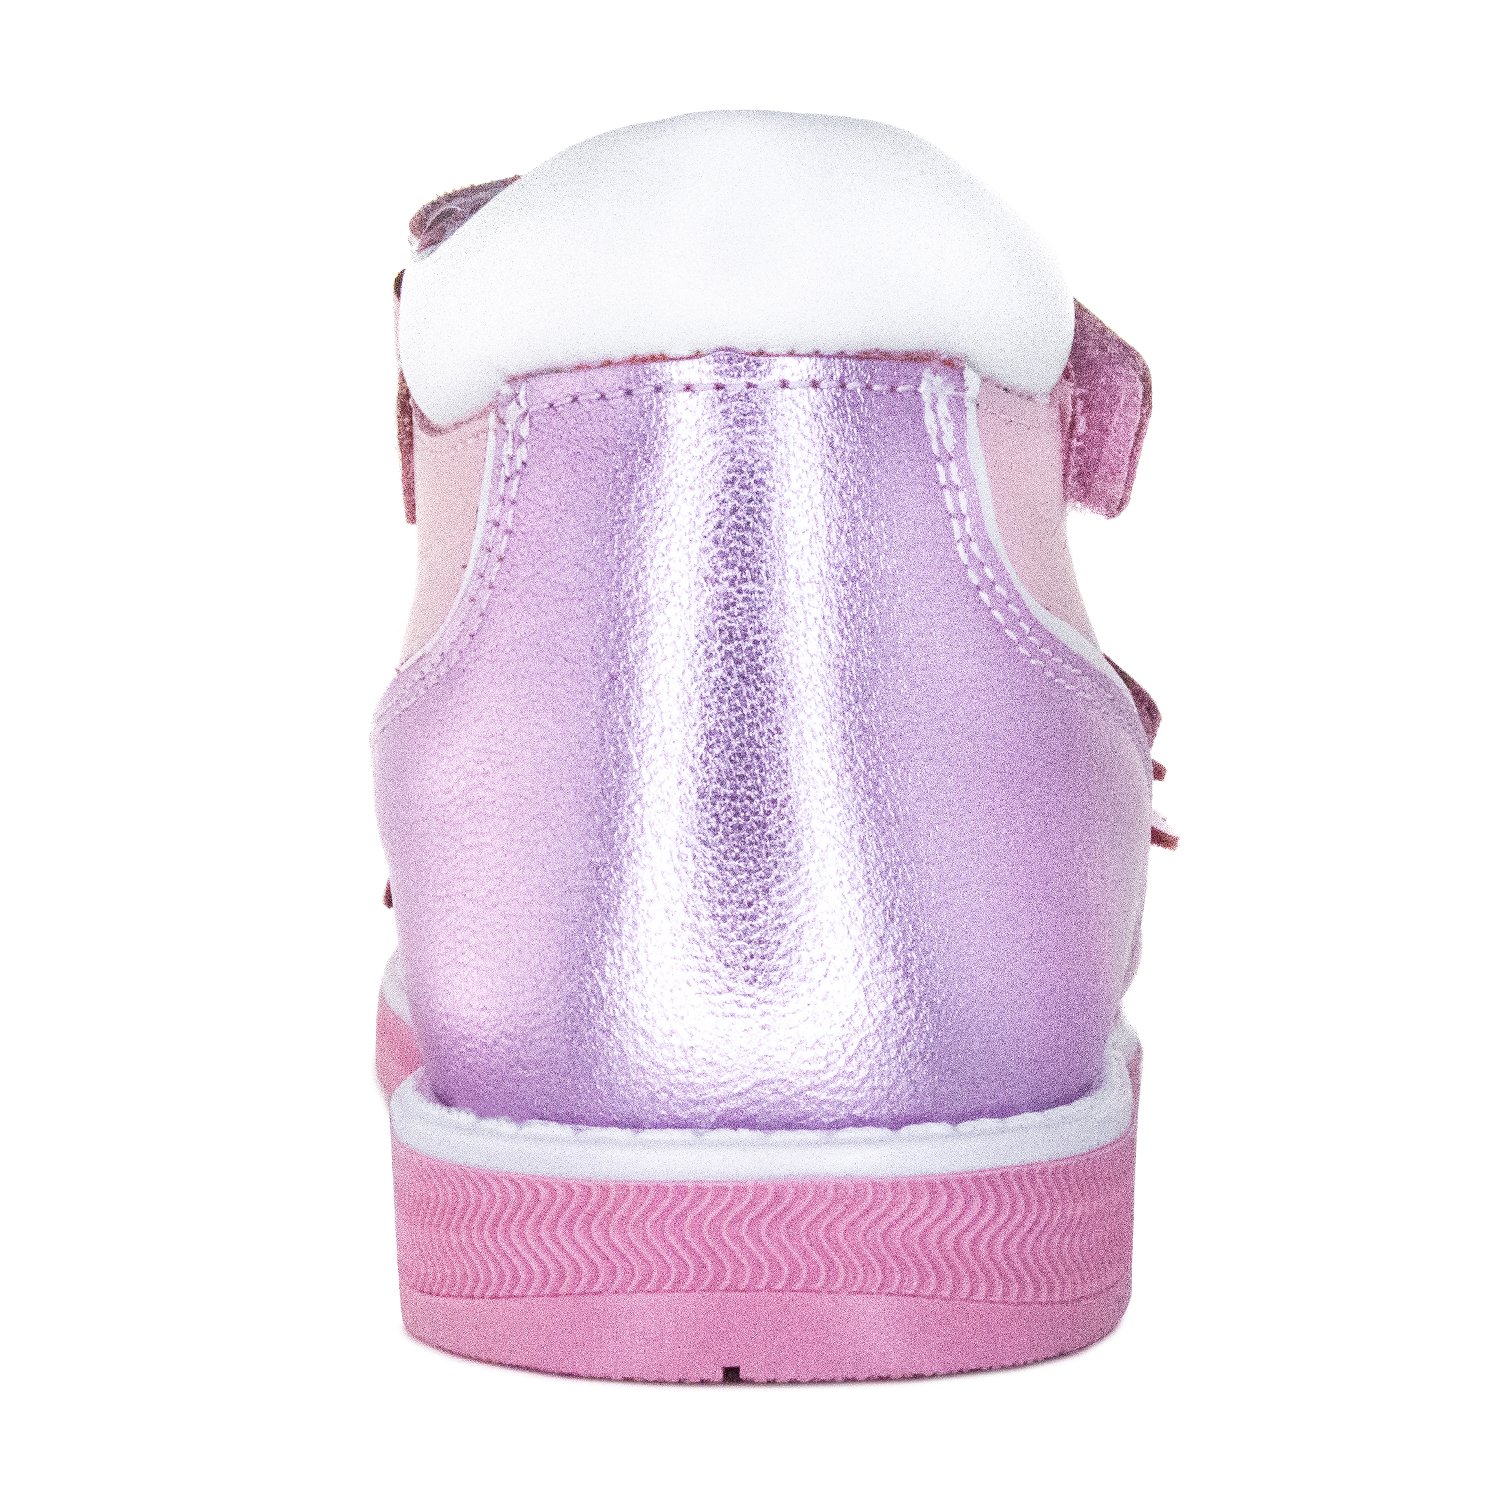 Детские сандалии ORTHOBOOM 27057-01 розовый металлик